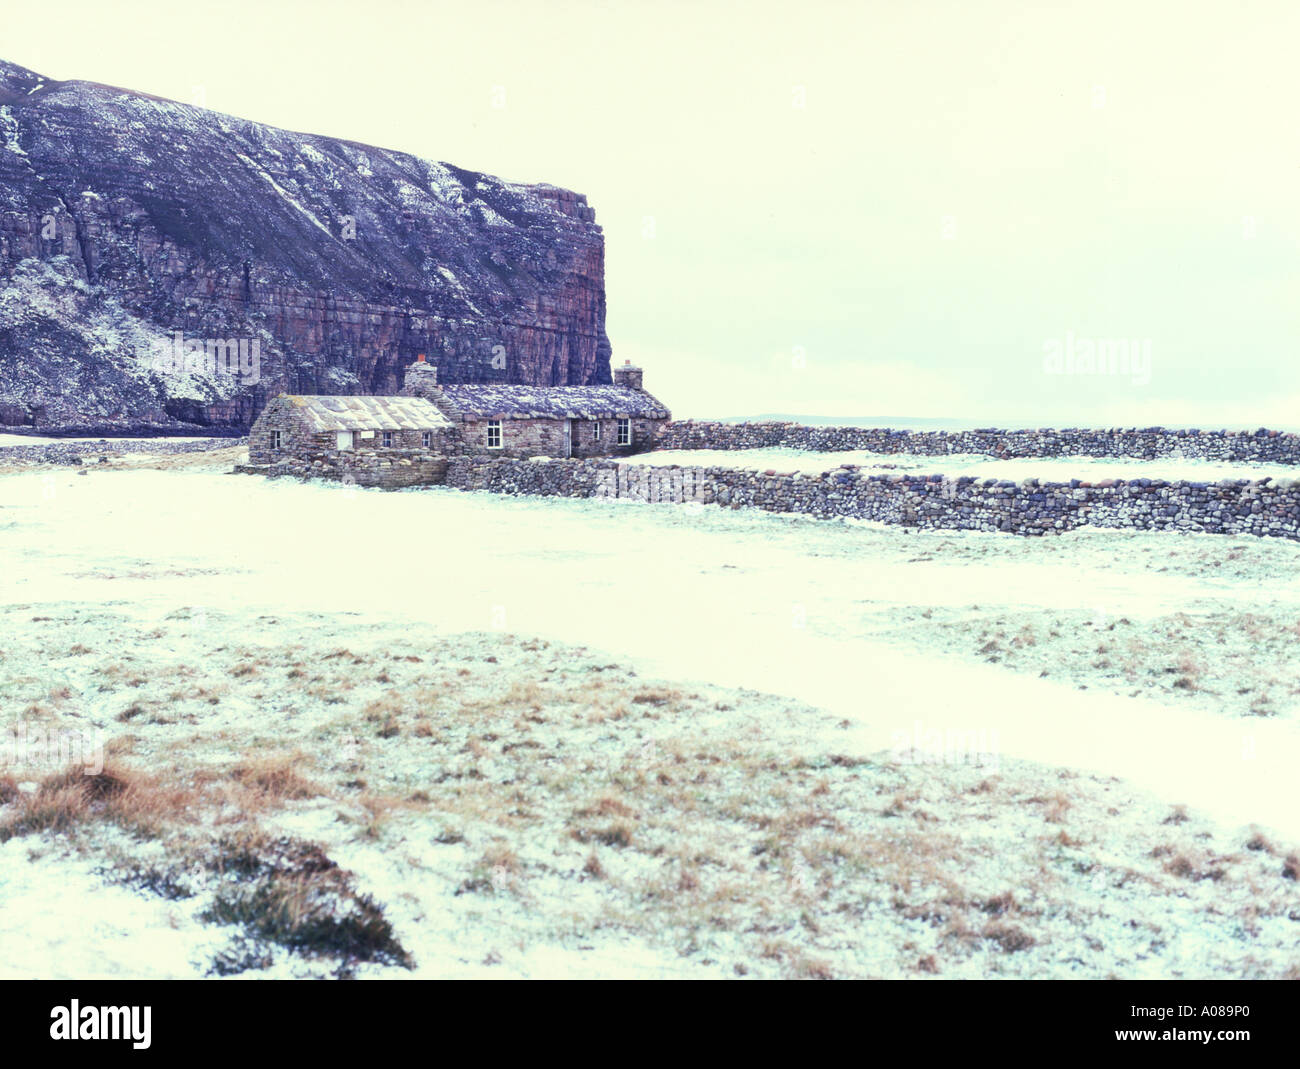 dh Rackwick HOY ORKNEY A bothy Cottage in inverno nevoso regno unito gran bretagna scozia neve remota scena scozzese bothys Foto Stock